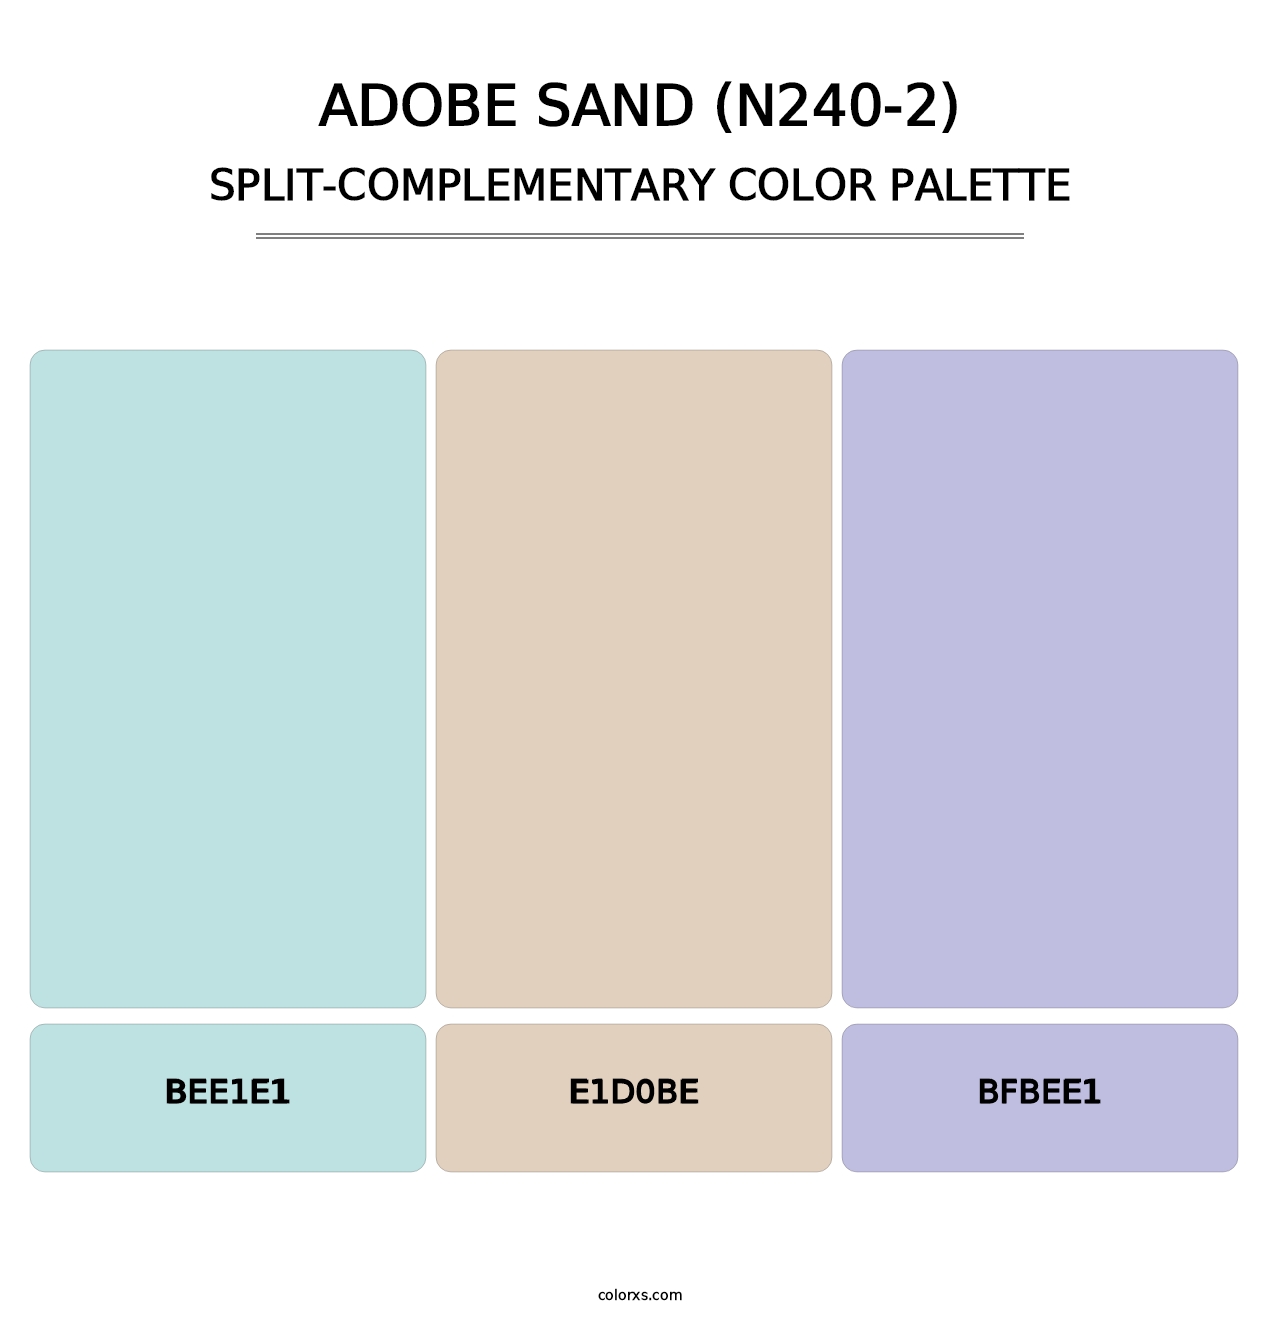 Adobe Sand (N240-2) - Split-Complementary Color Palette